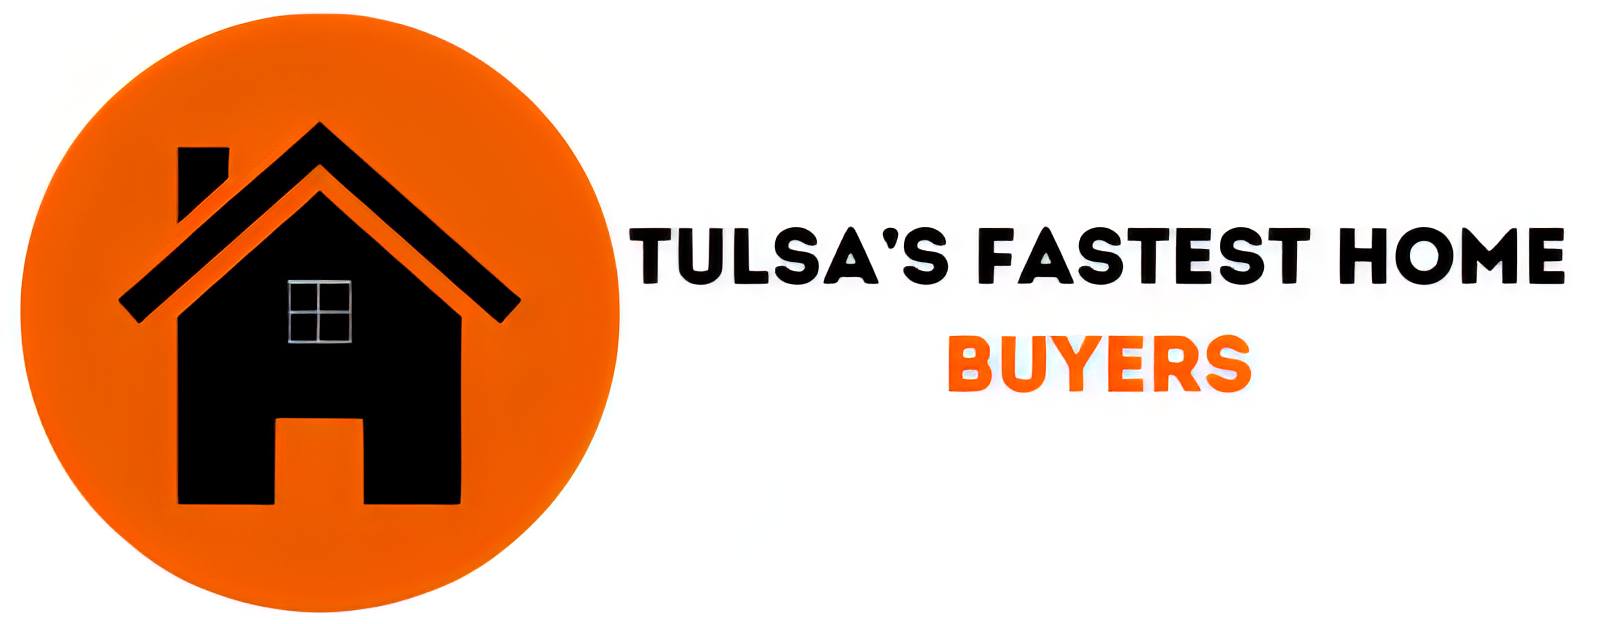 Tulsa Fastest Home Buyers logo